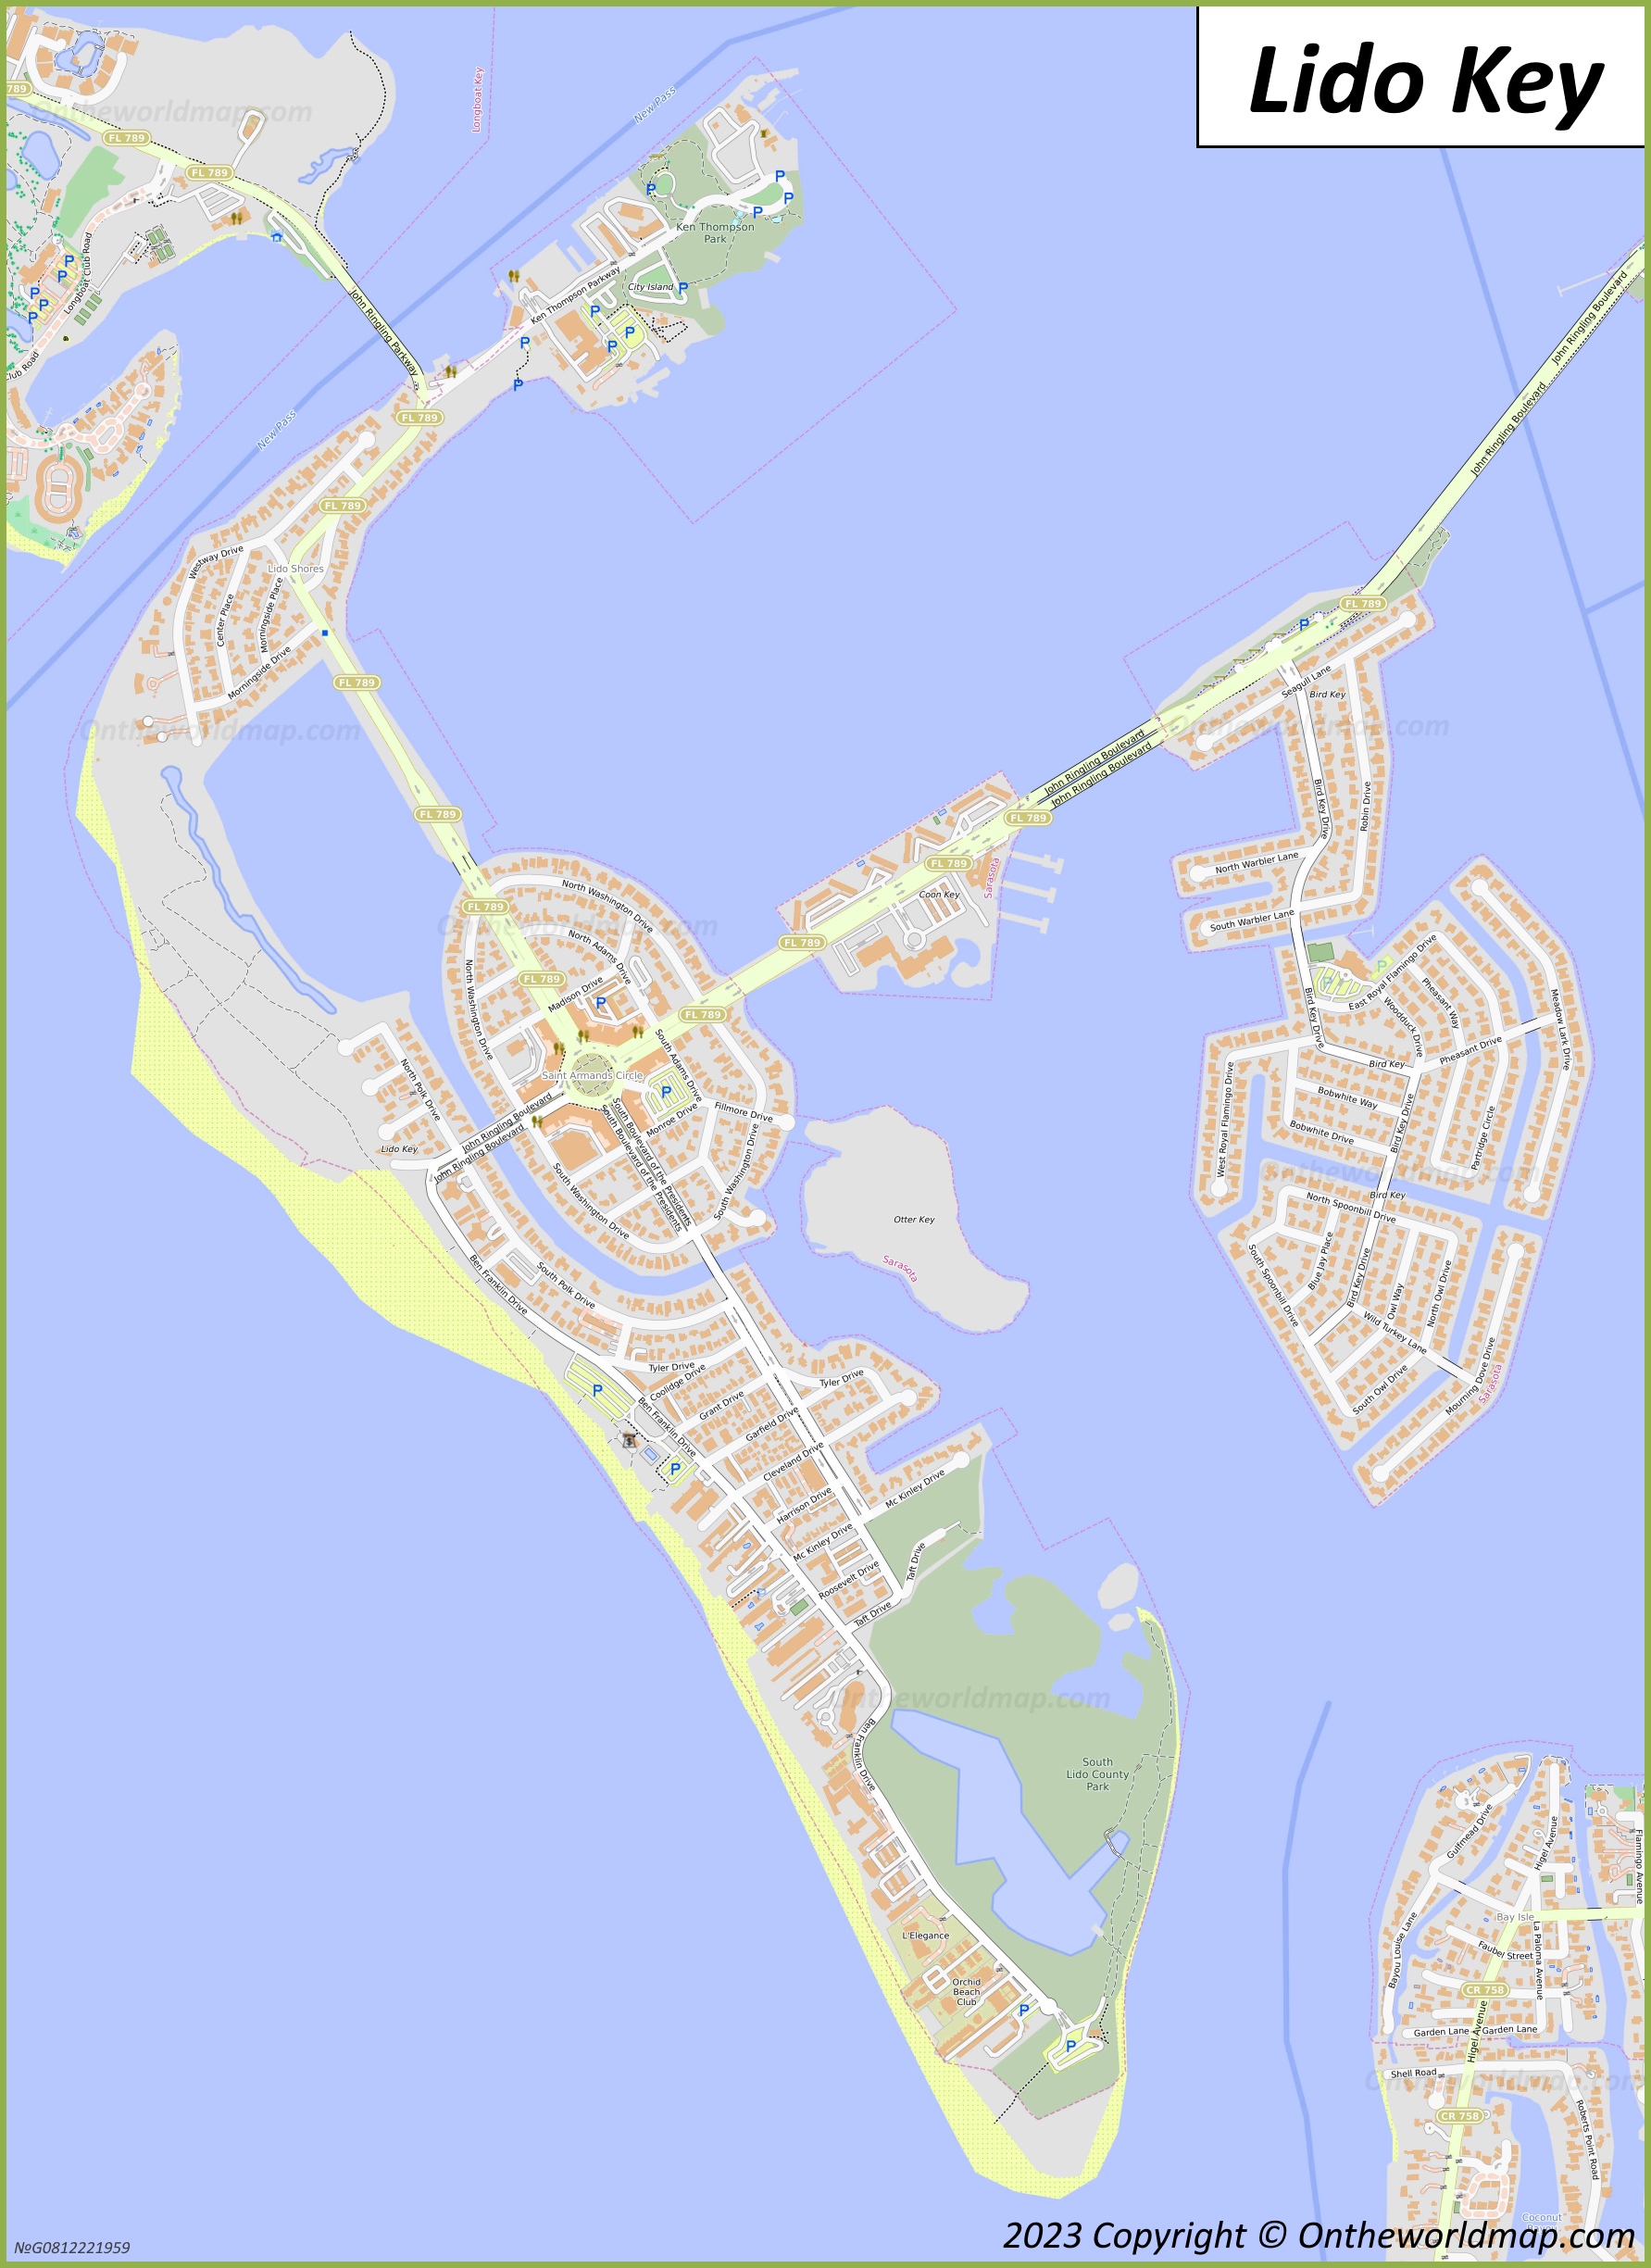 Map of Lido Key and St. Armands Key